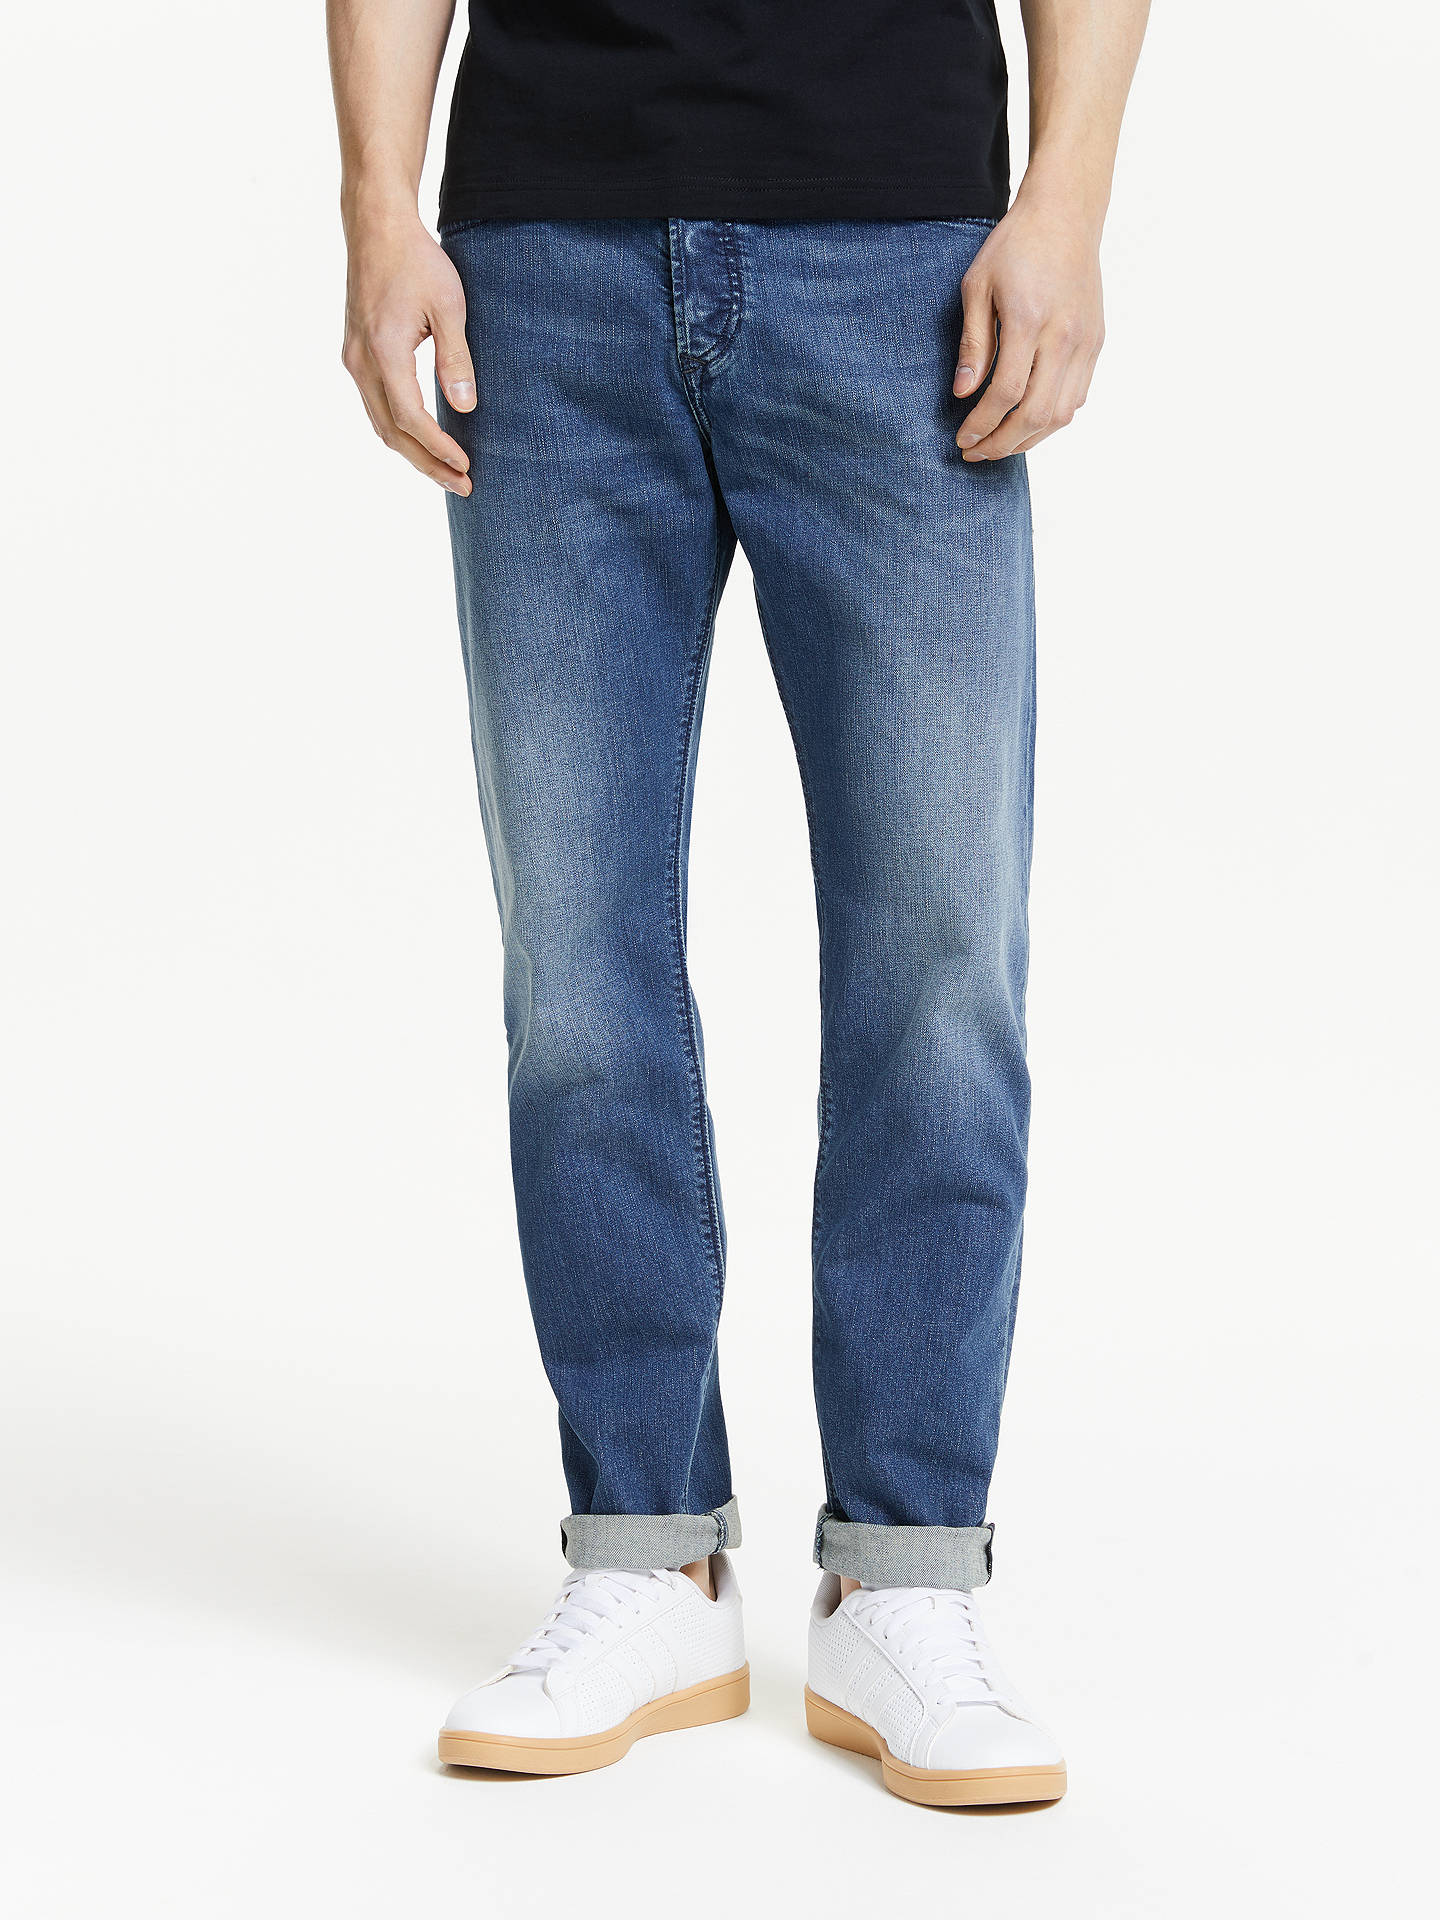 Diesel Buster Tapered Jeans, Medium Blue at John Lewis & Partners